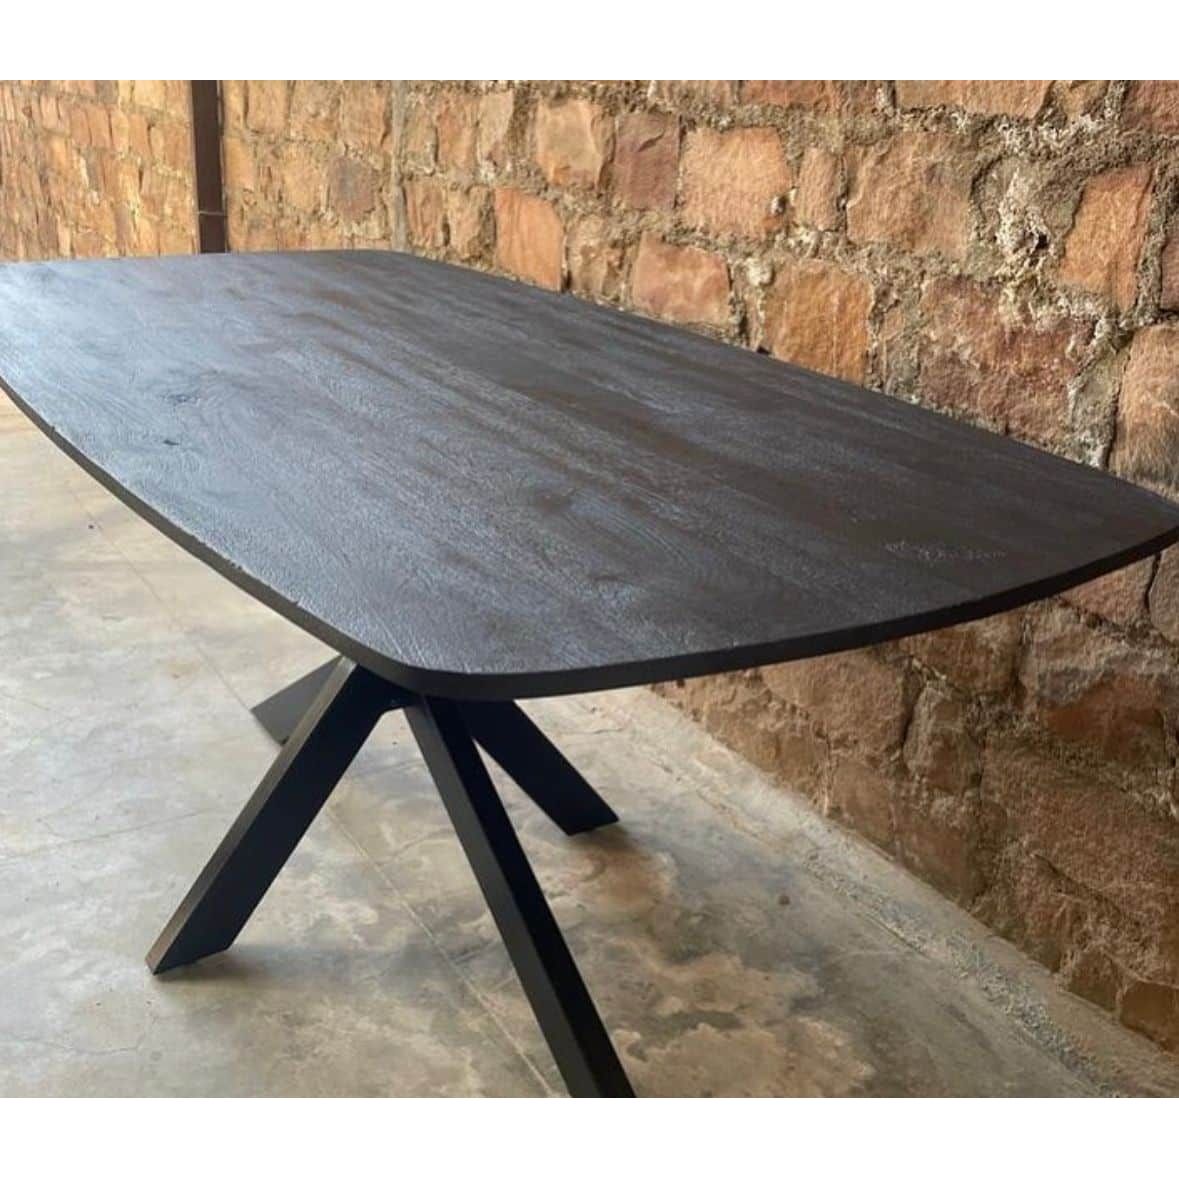 Bahia table Danish oval black - 200cm